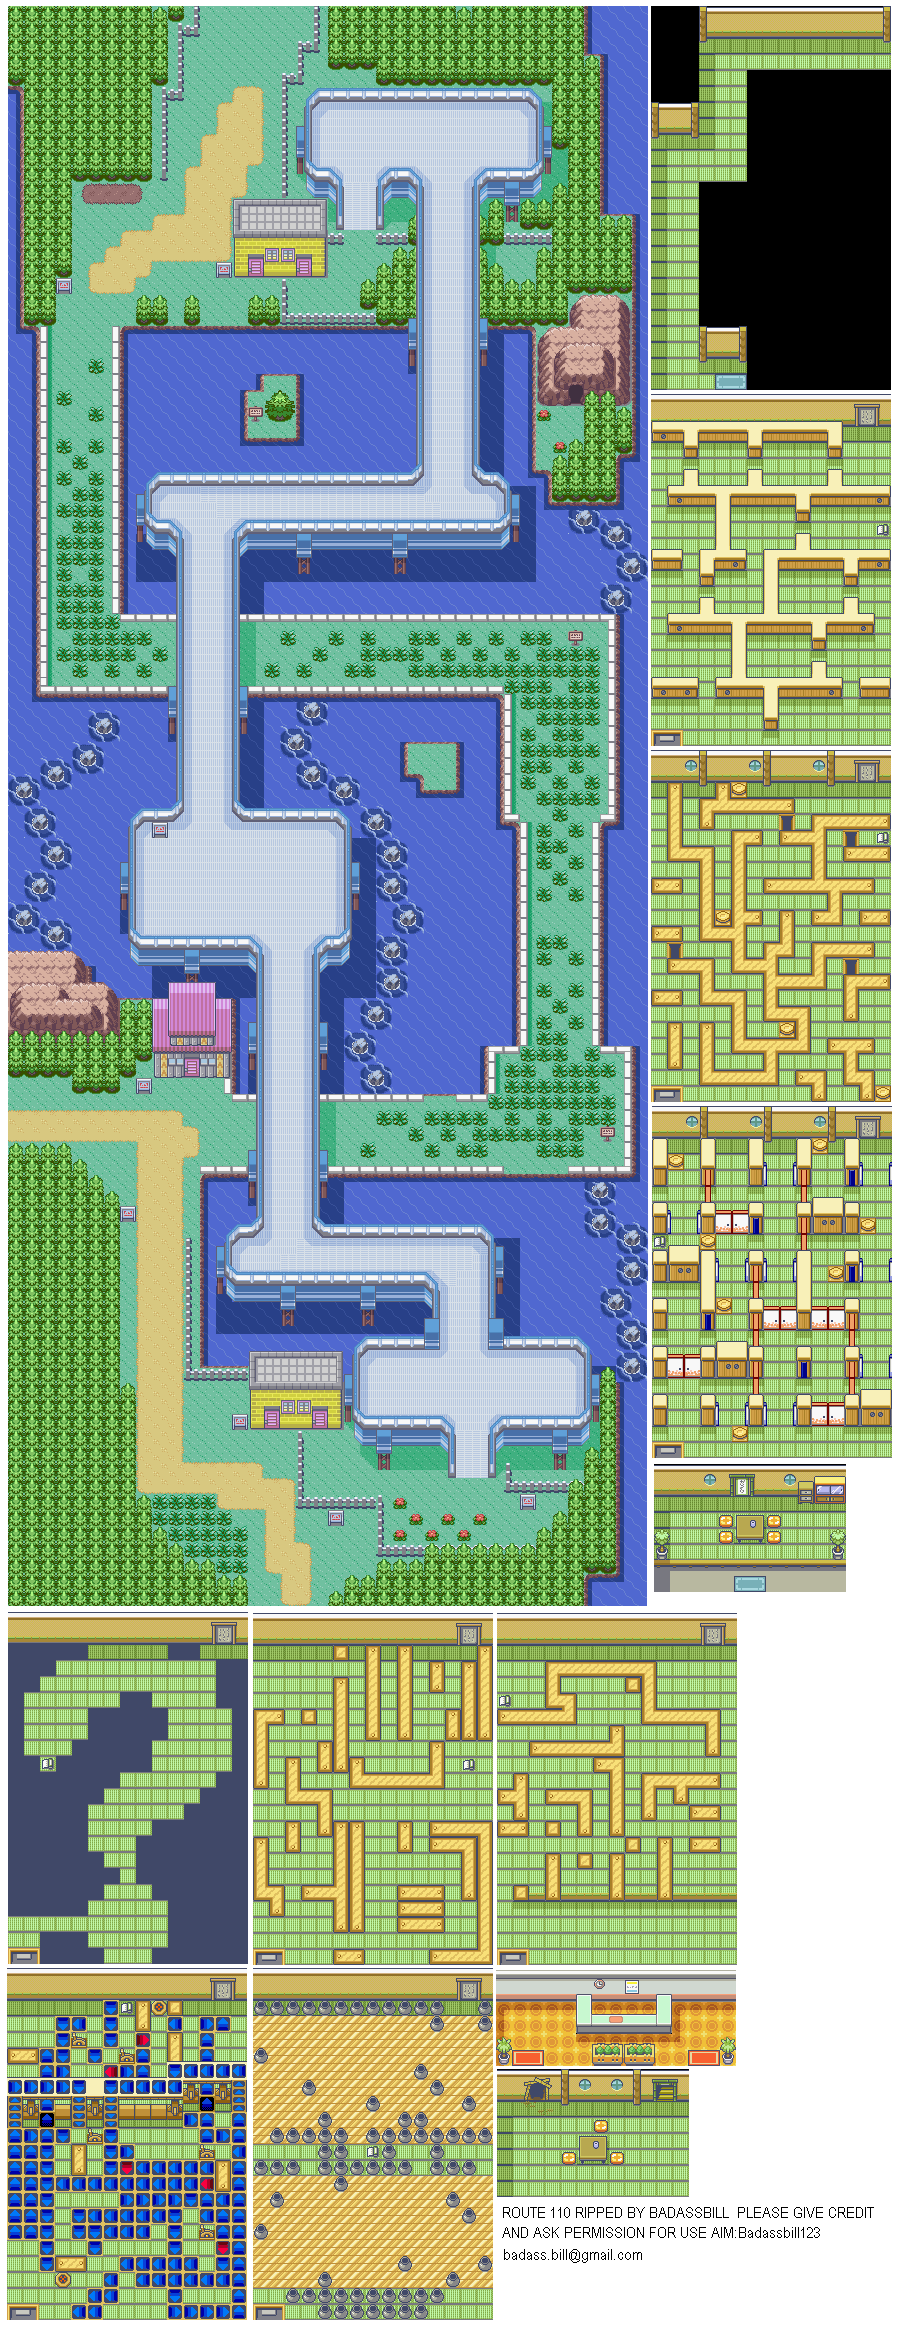 Pokémon Ruby / Sapphire - Route 110